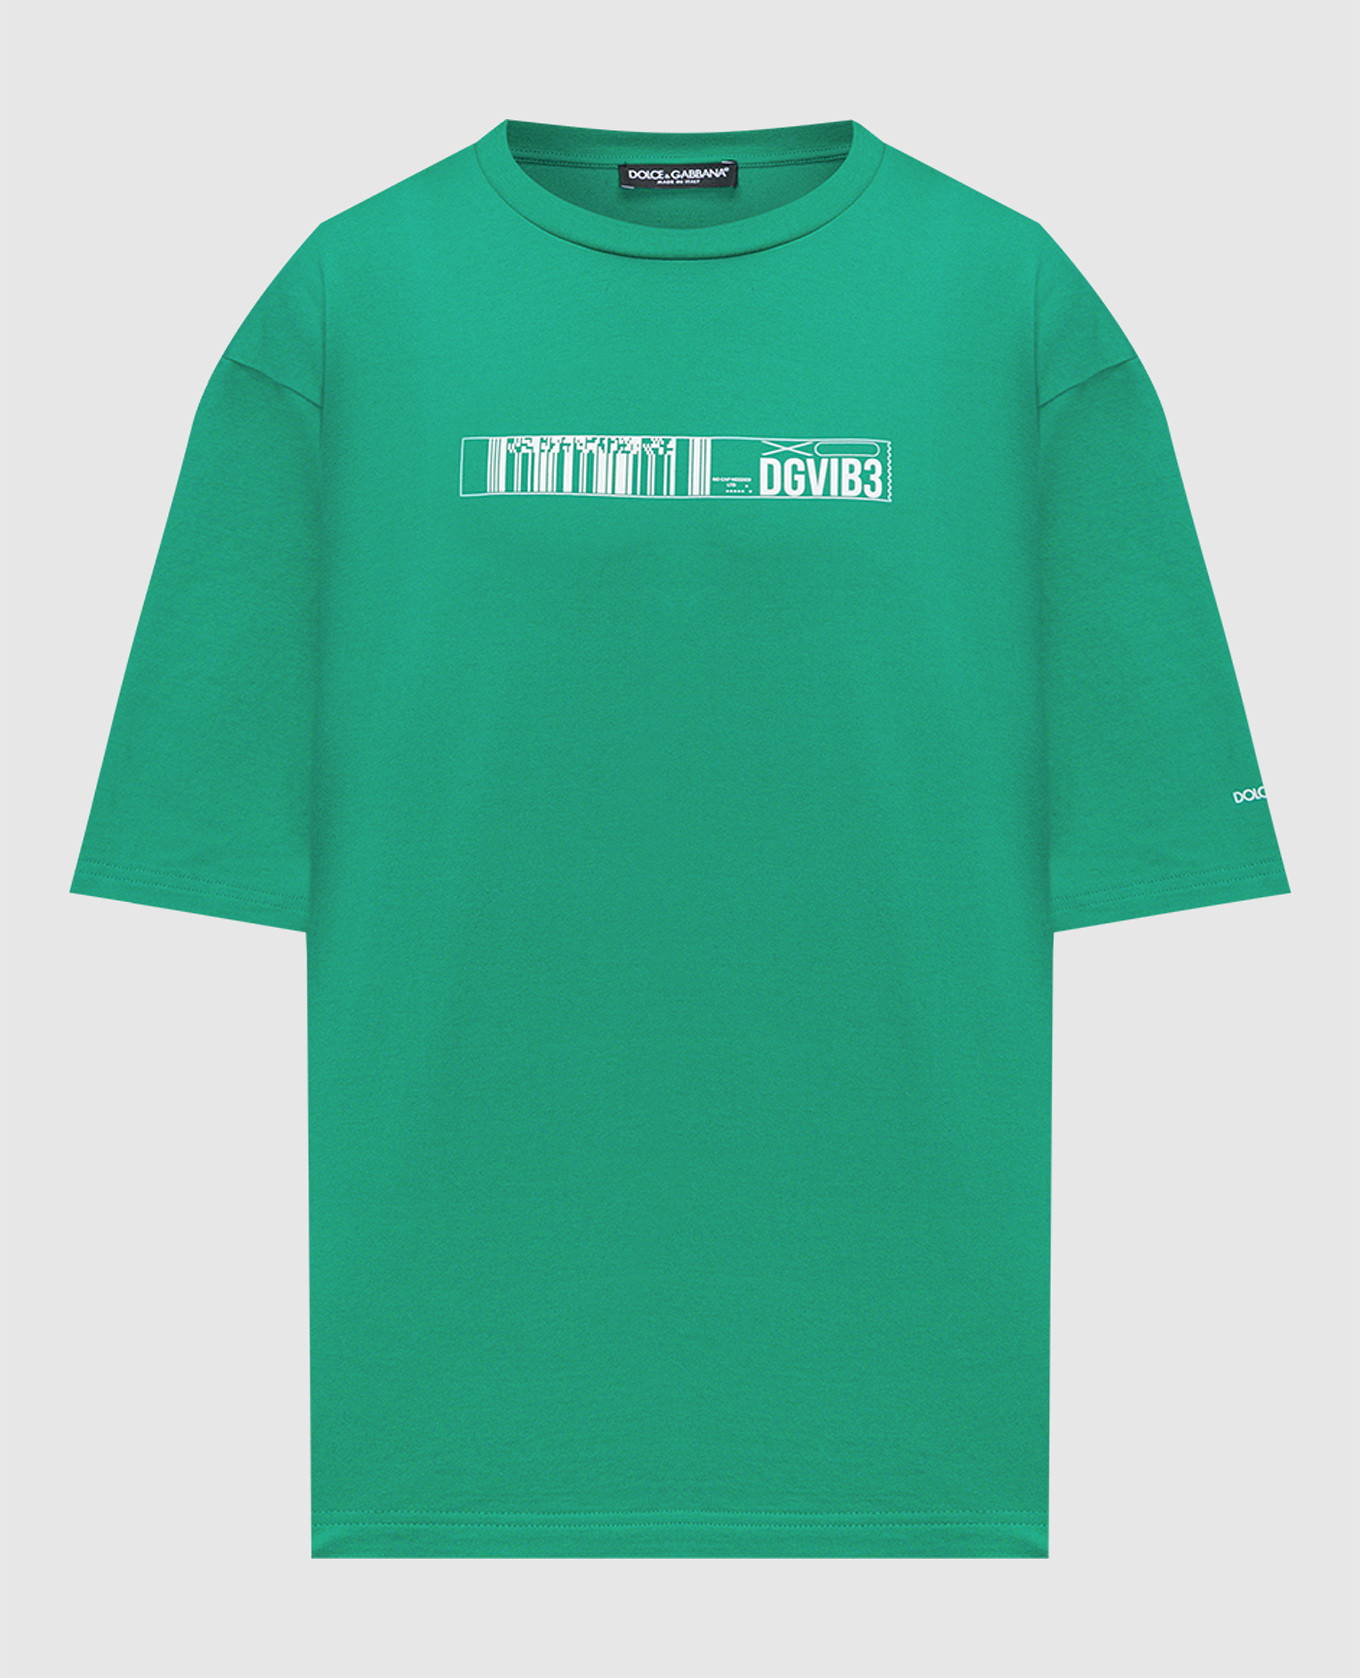 Green t-shirt with DGVIB3 print